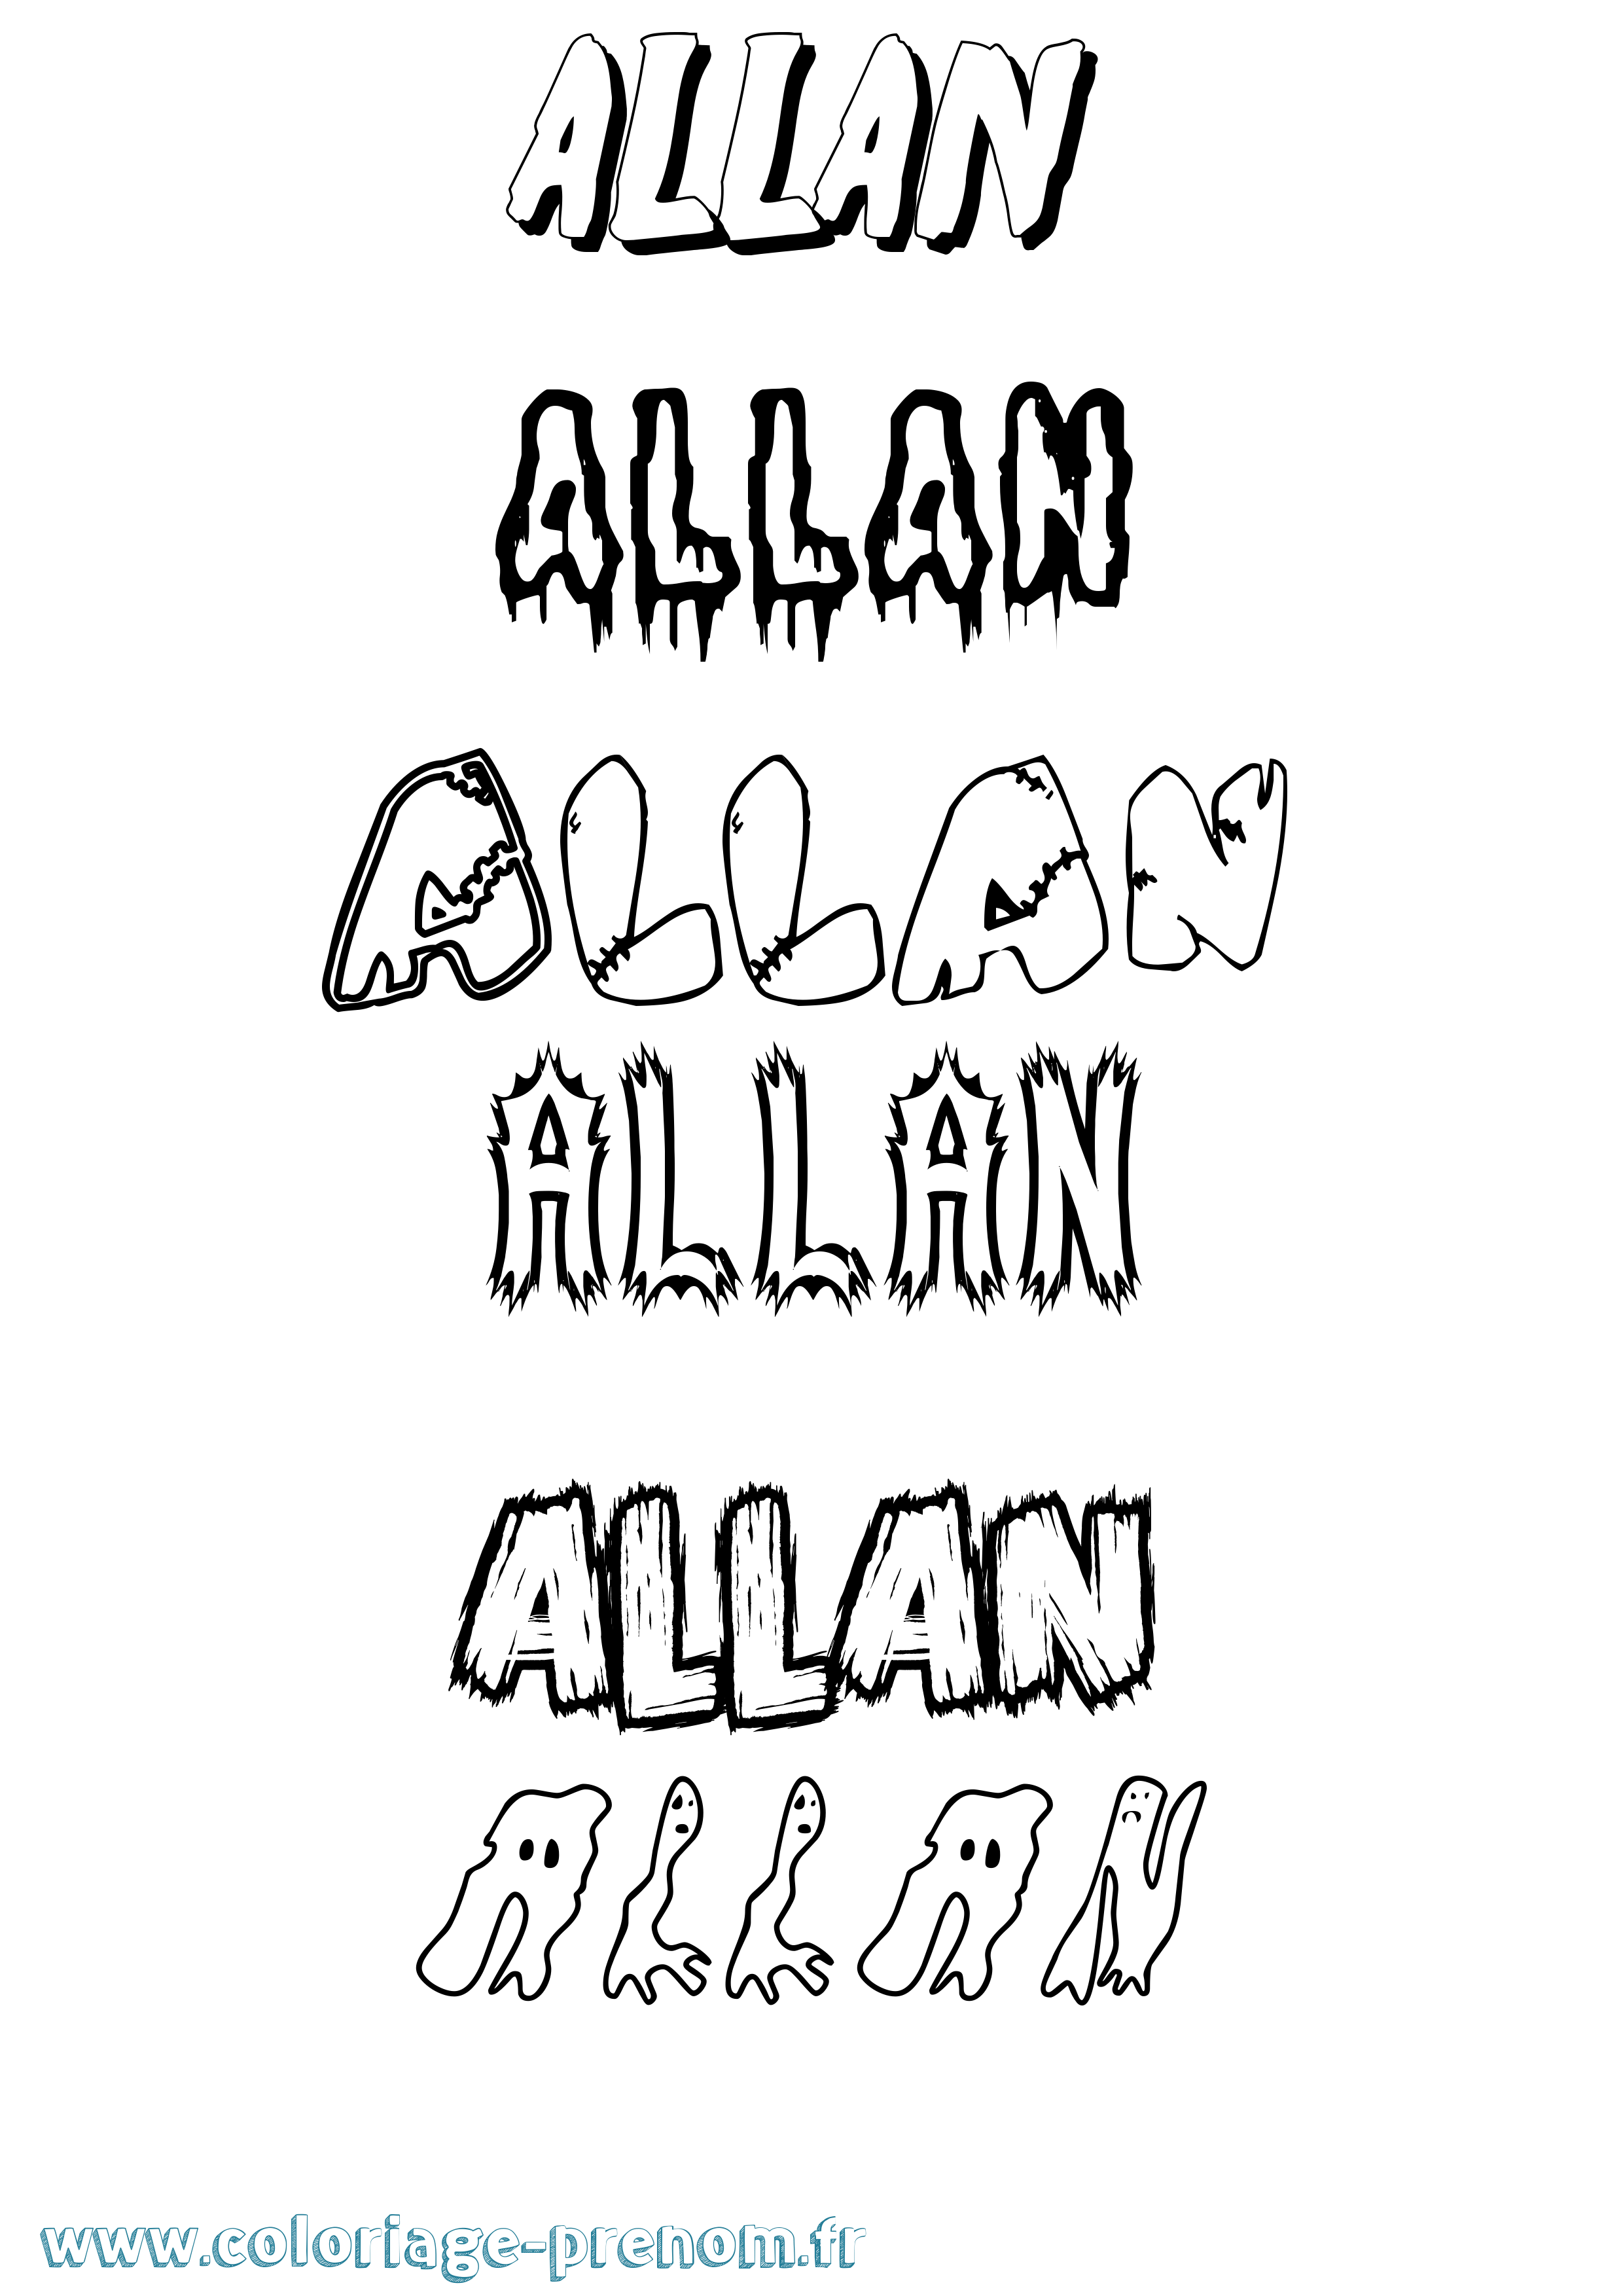 Coloriage prénom Allan Frisson